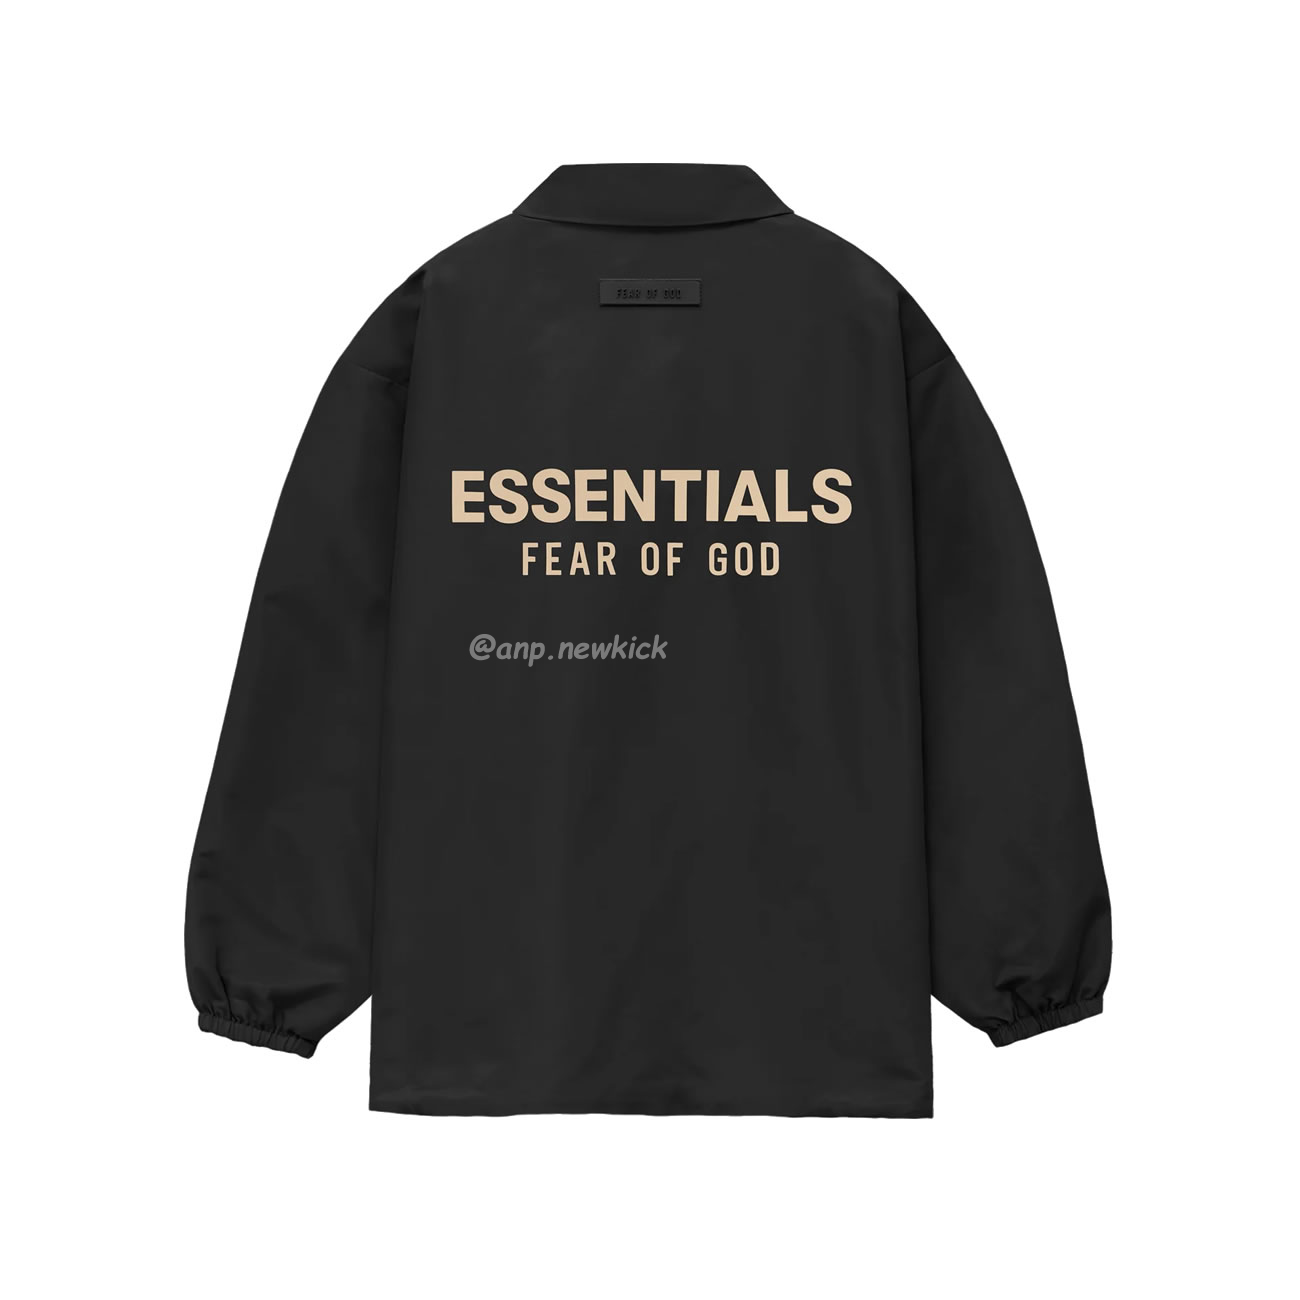 Fear Of God Essentials Fog 23fw Coach Jacket Windbreaker Jacket Black Apricot Gray S Xl (5) - newkick.org